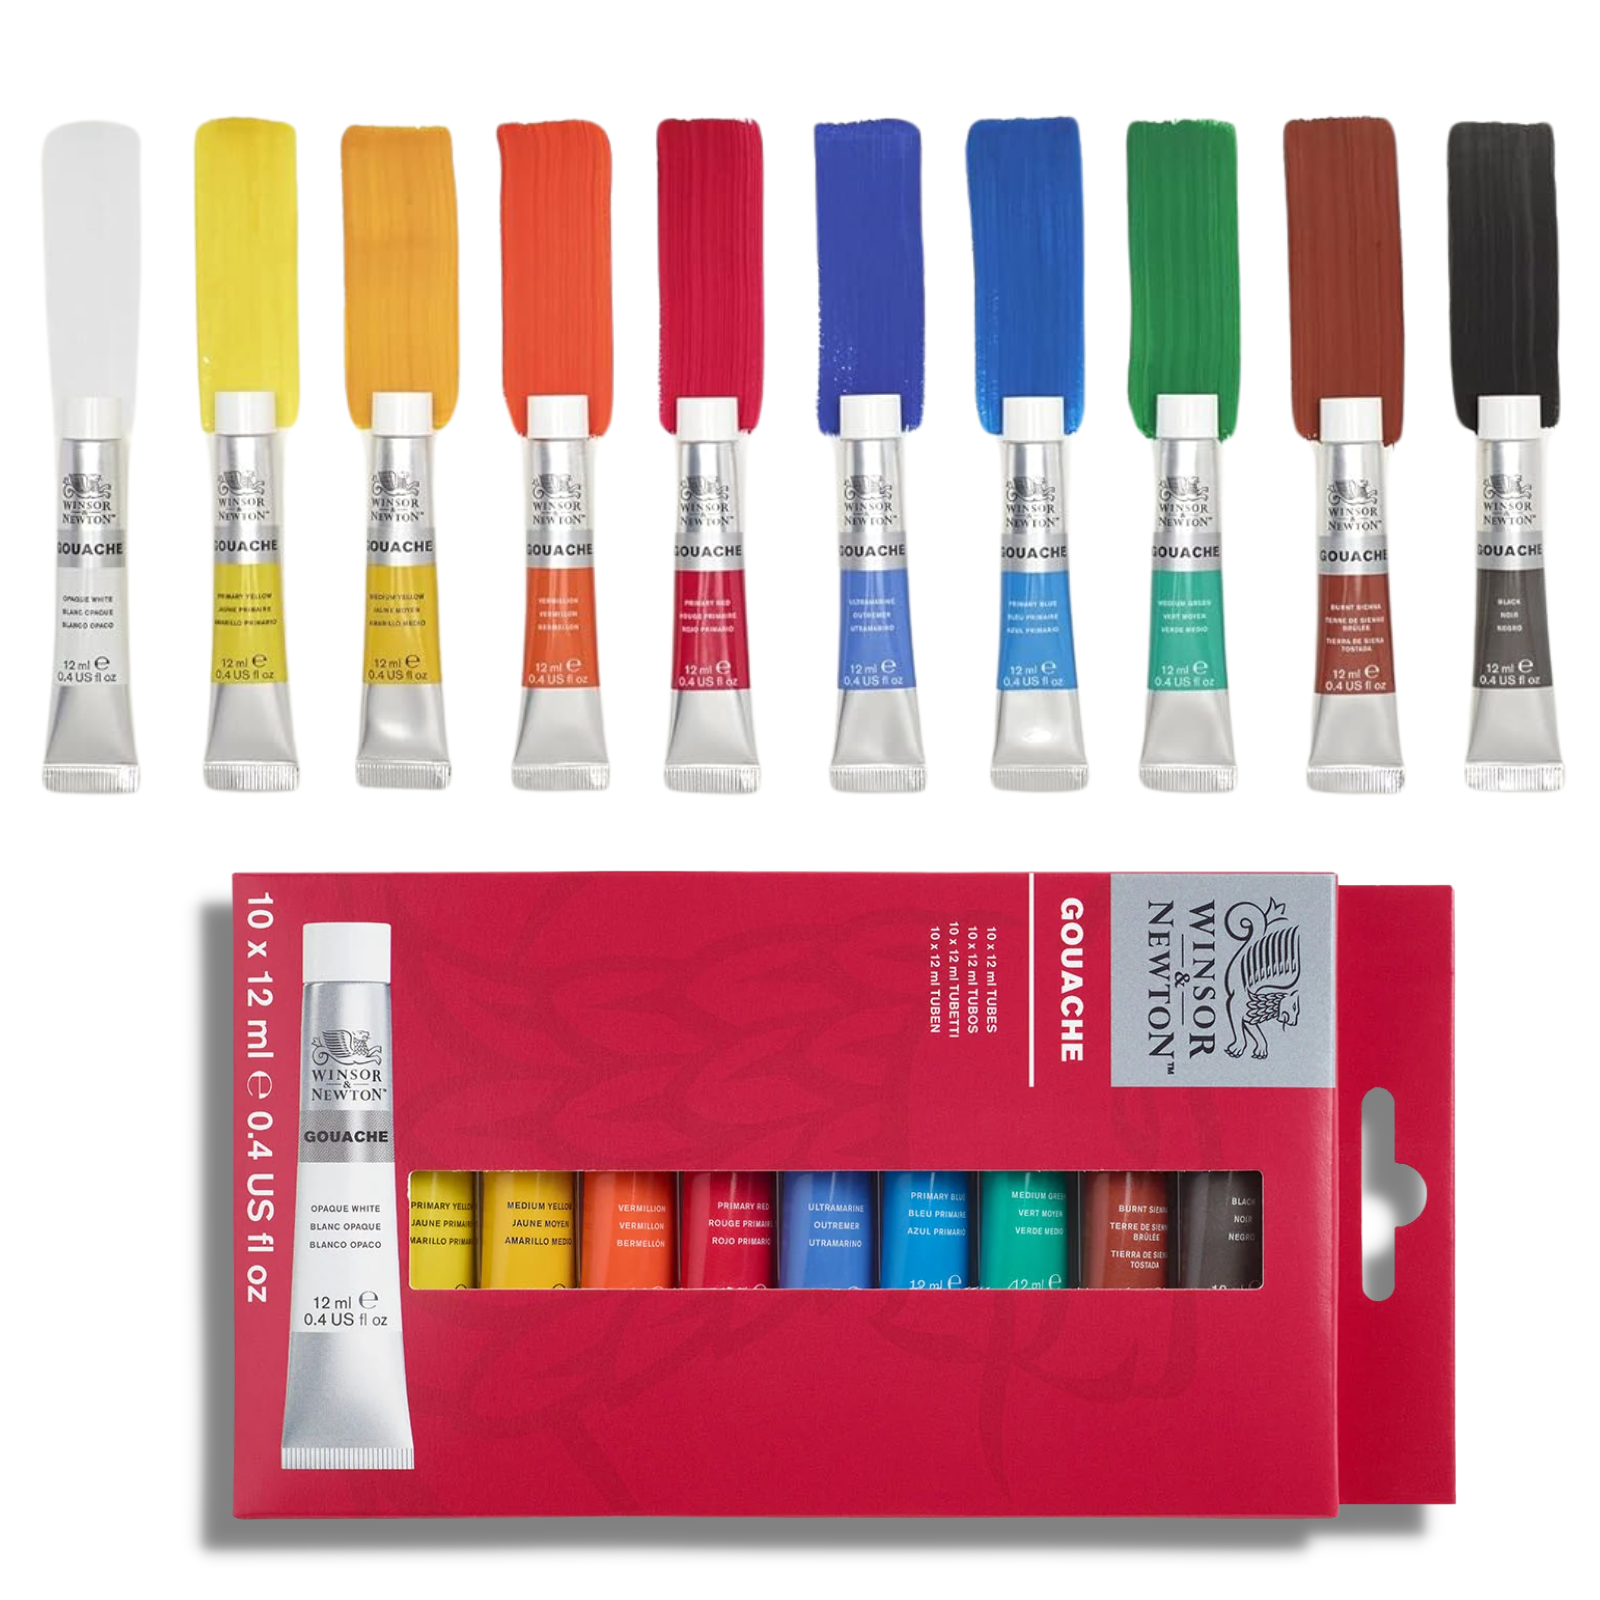 Winsor & Newton Gouache Primary Colour Set, 12ml, 10 Colours - Experiment with creating impactful, vibrant artwork